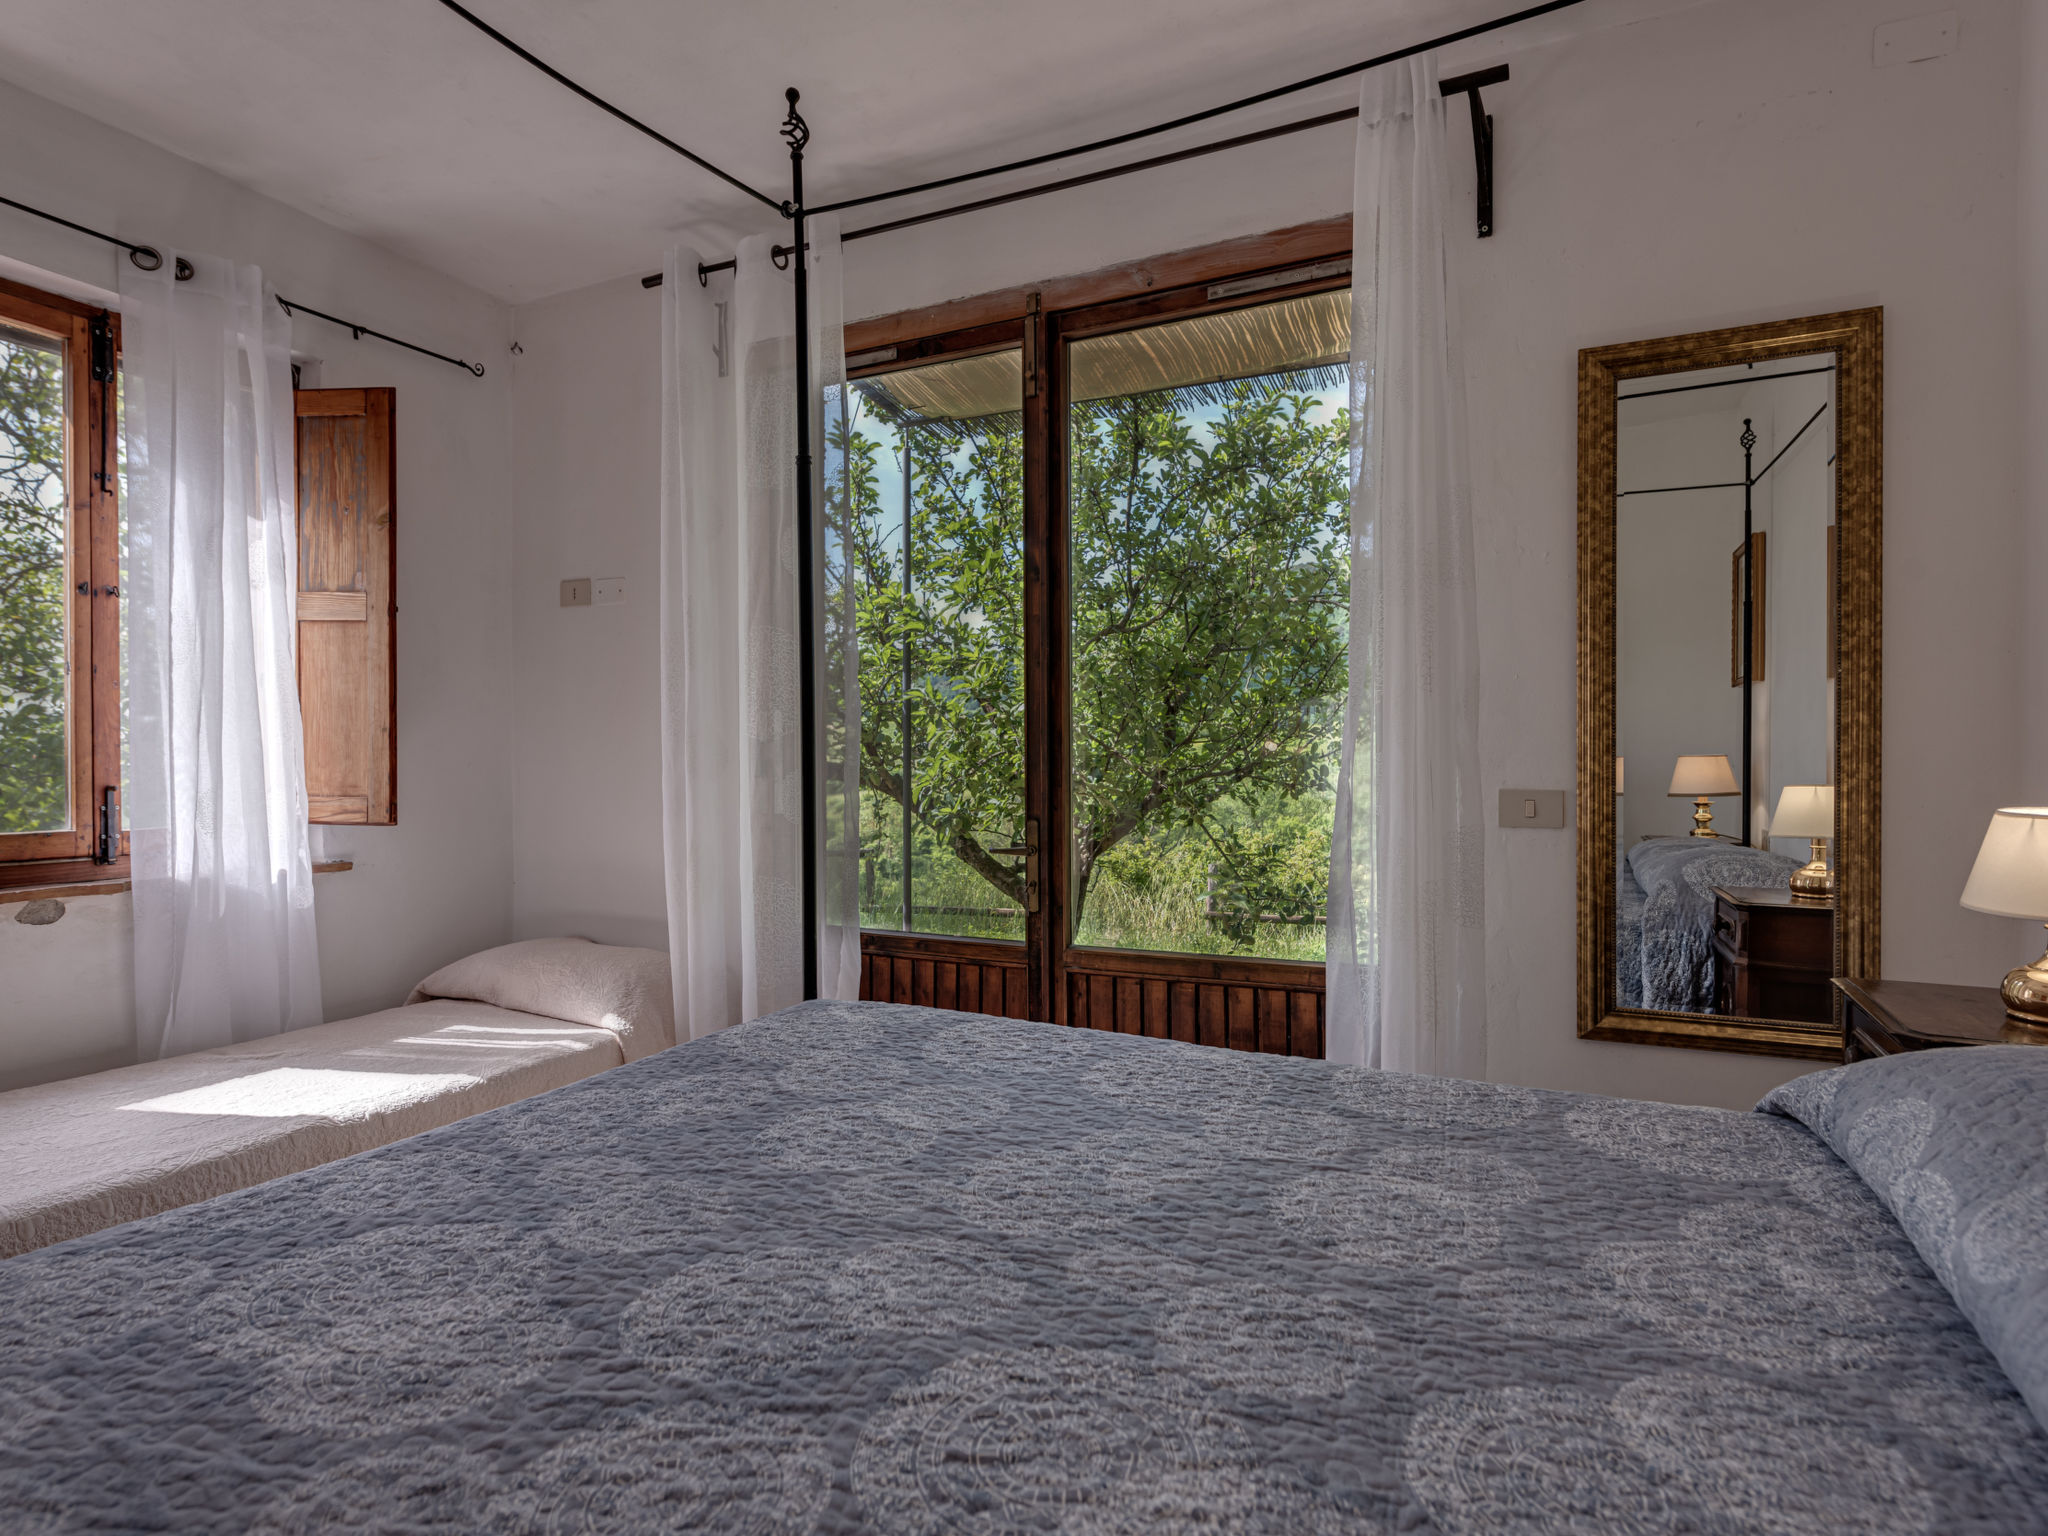 Foto 47 - Casa con 4 camere da letto a San Gimignano con piscina e giardino